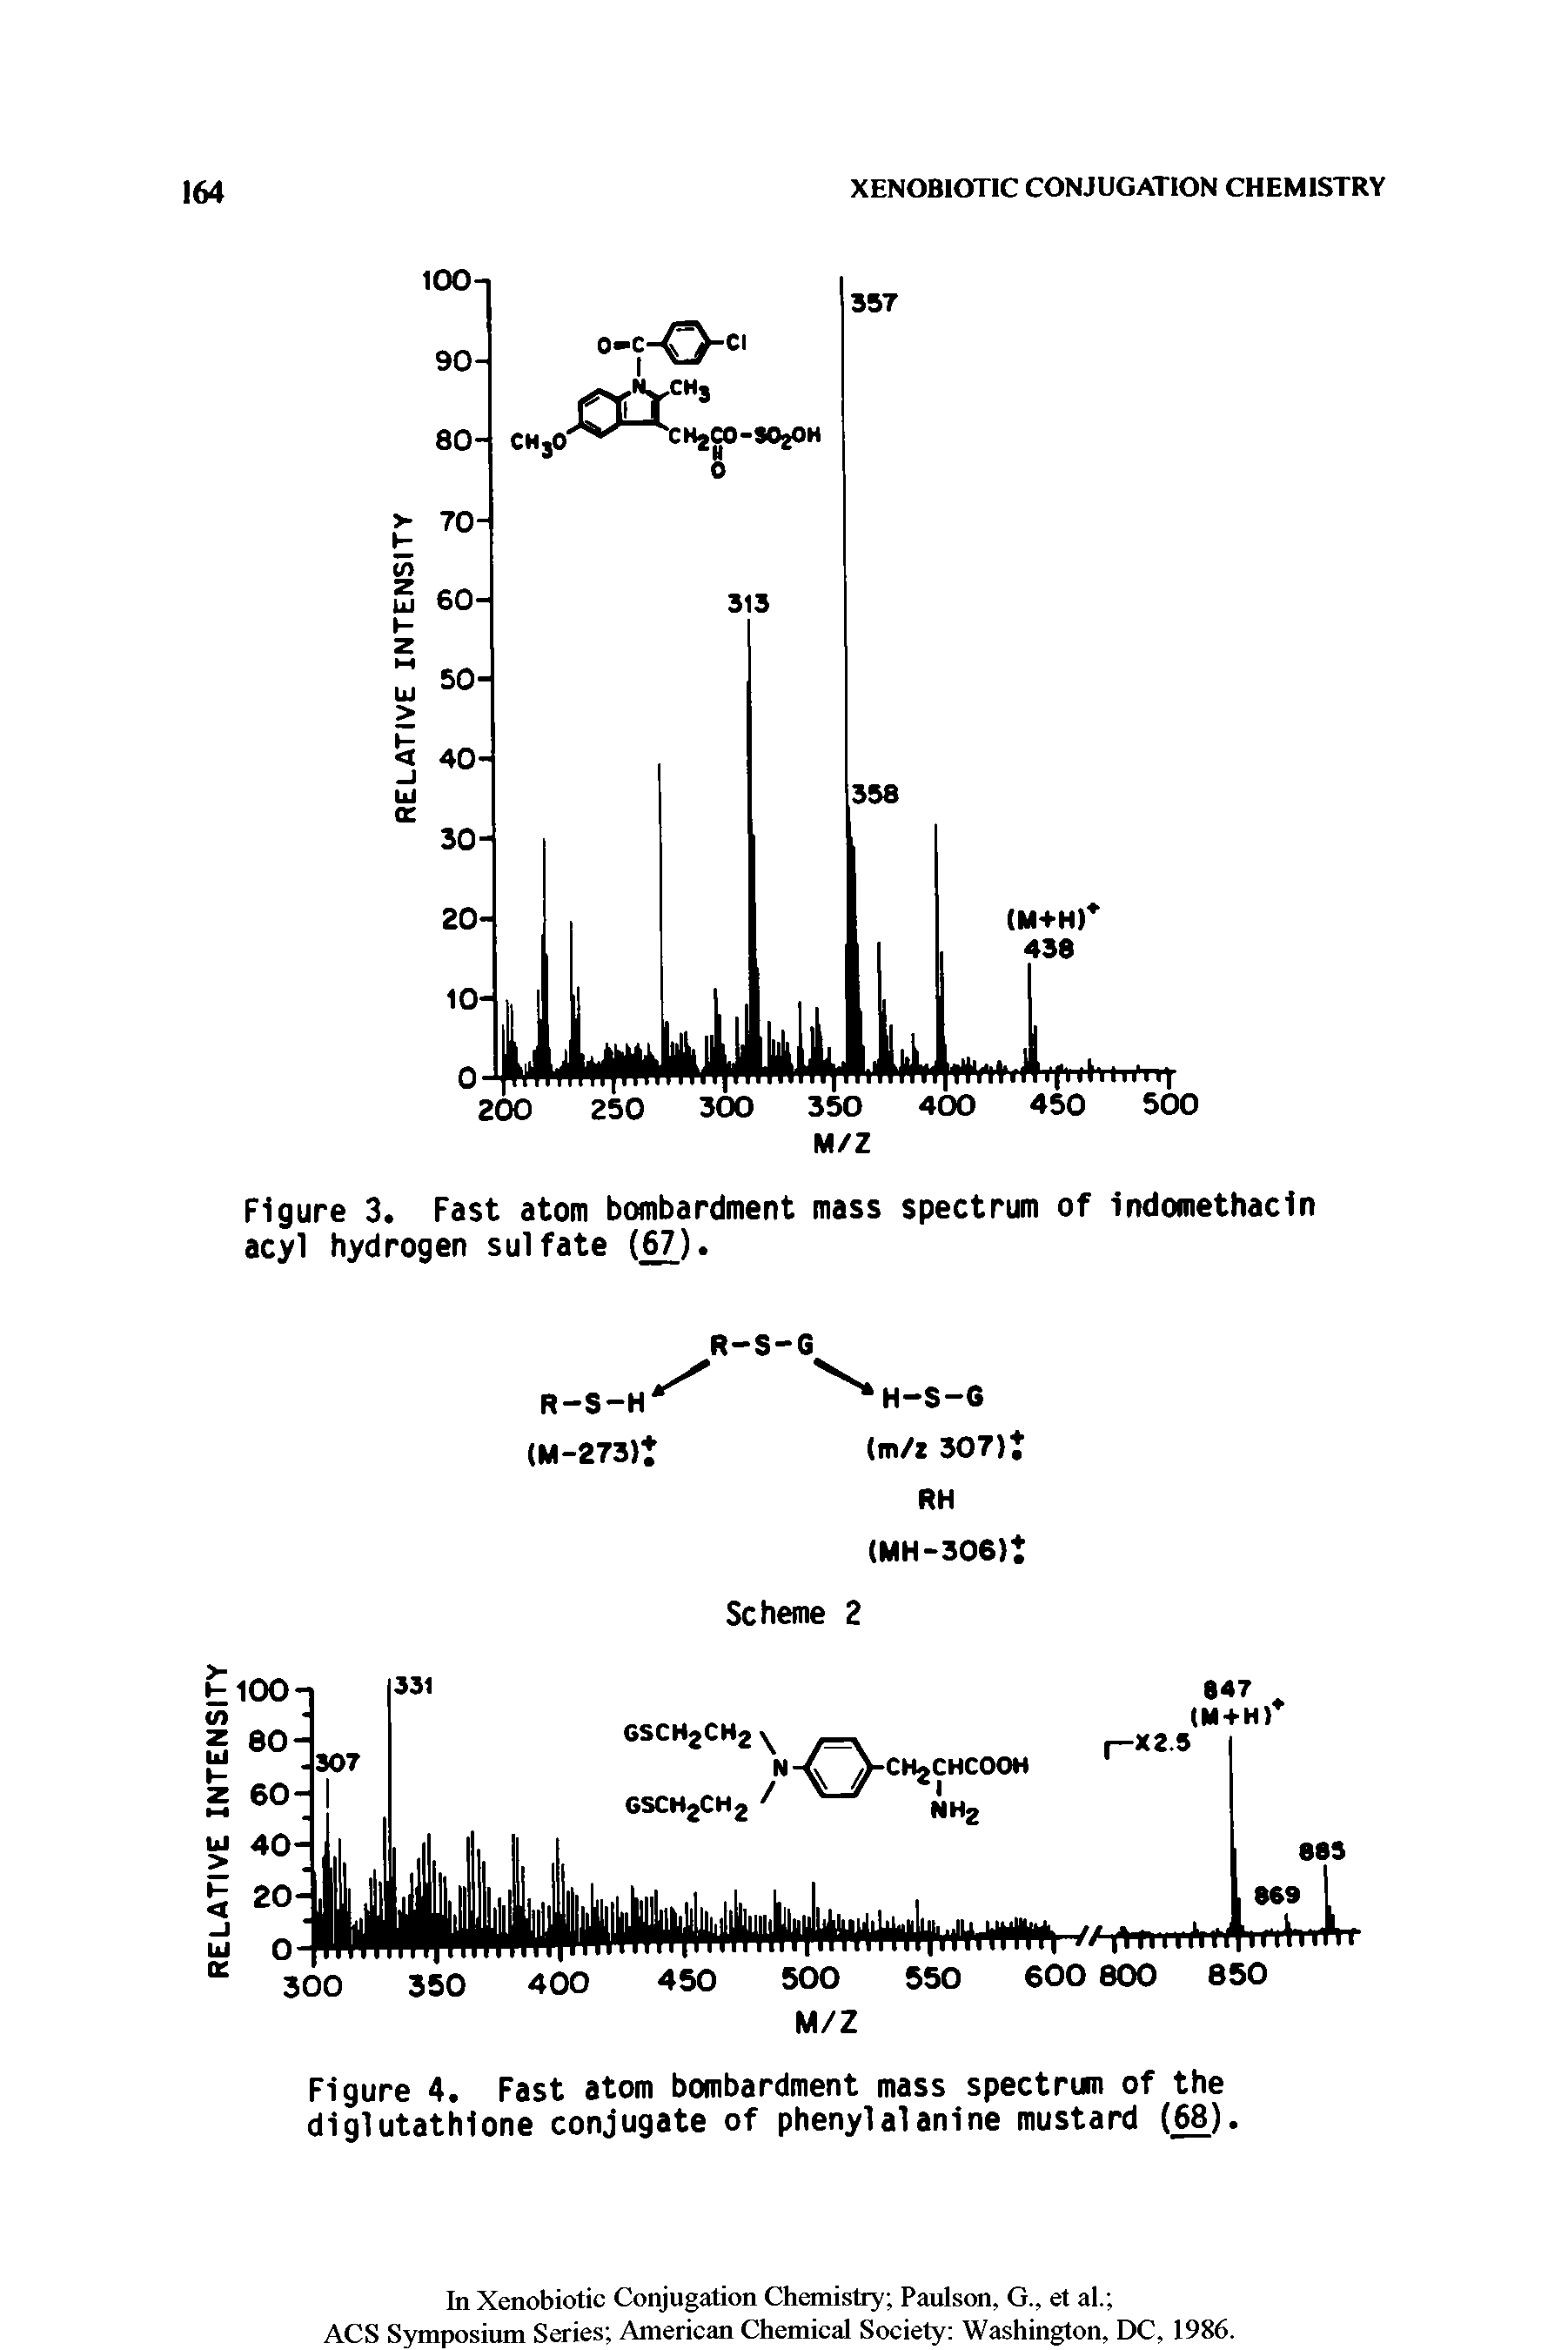 Figure 4, Fast atom bombardment mass spectrum of the diglutathtone conjugate of phenylalanine mustard (jM).